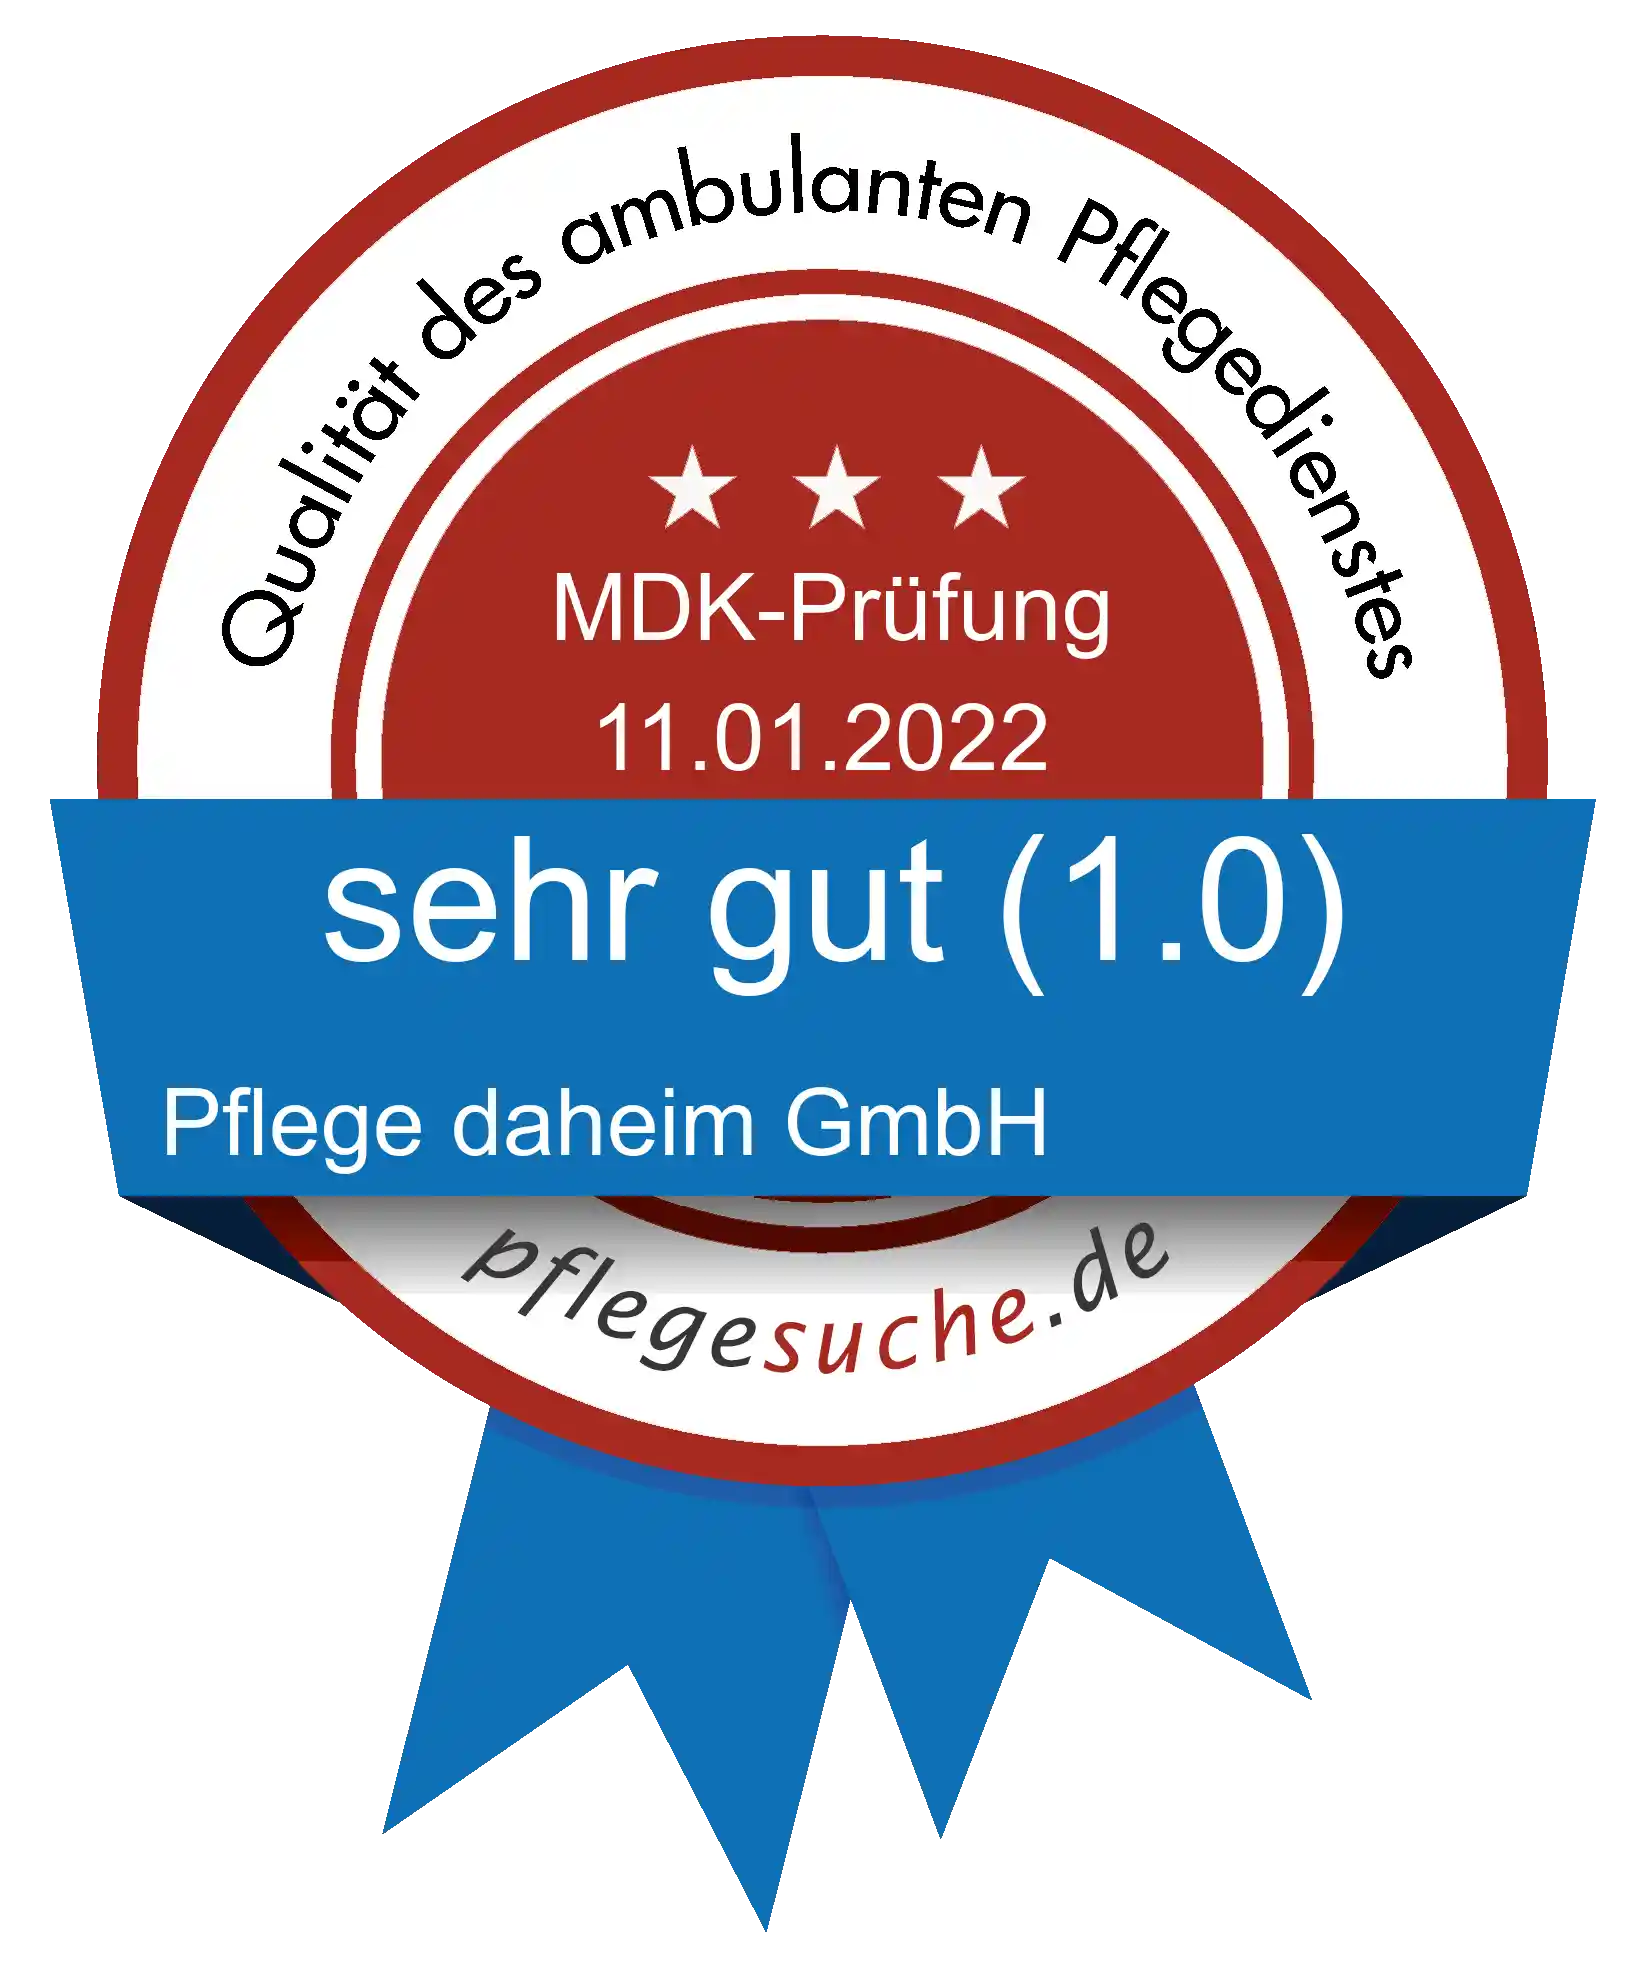 Siegel Benotung Pflege daheim GmbH